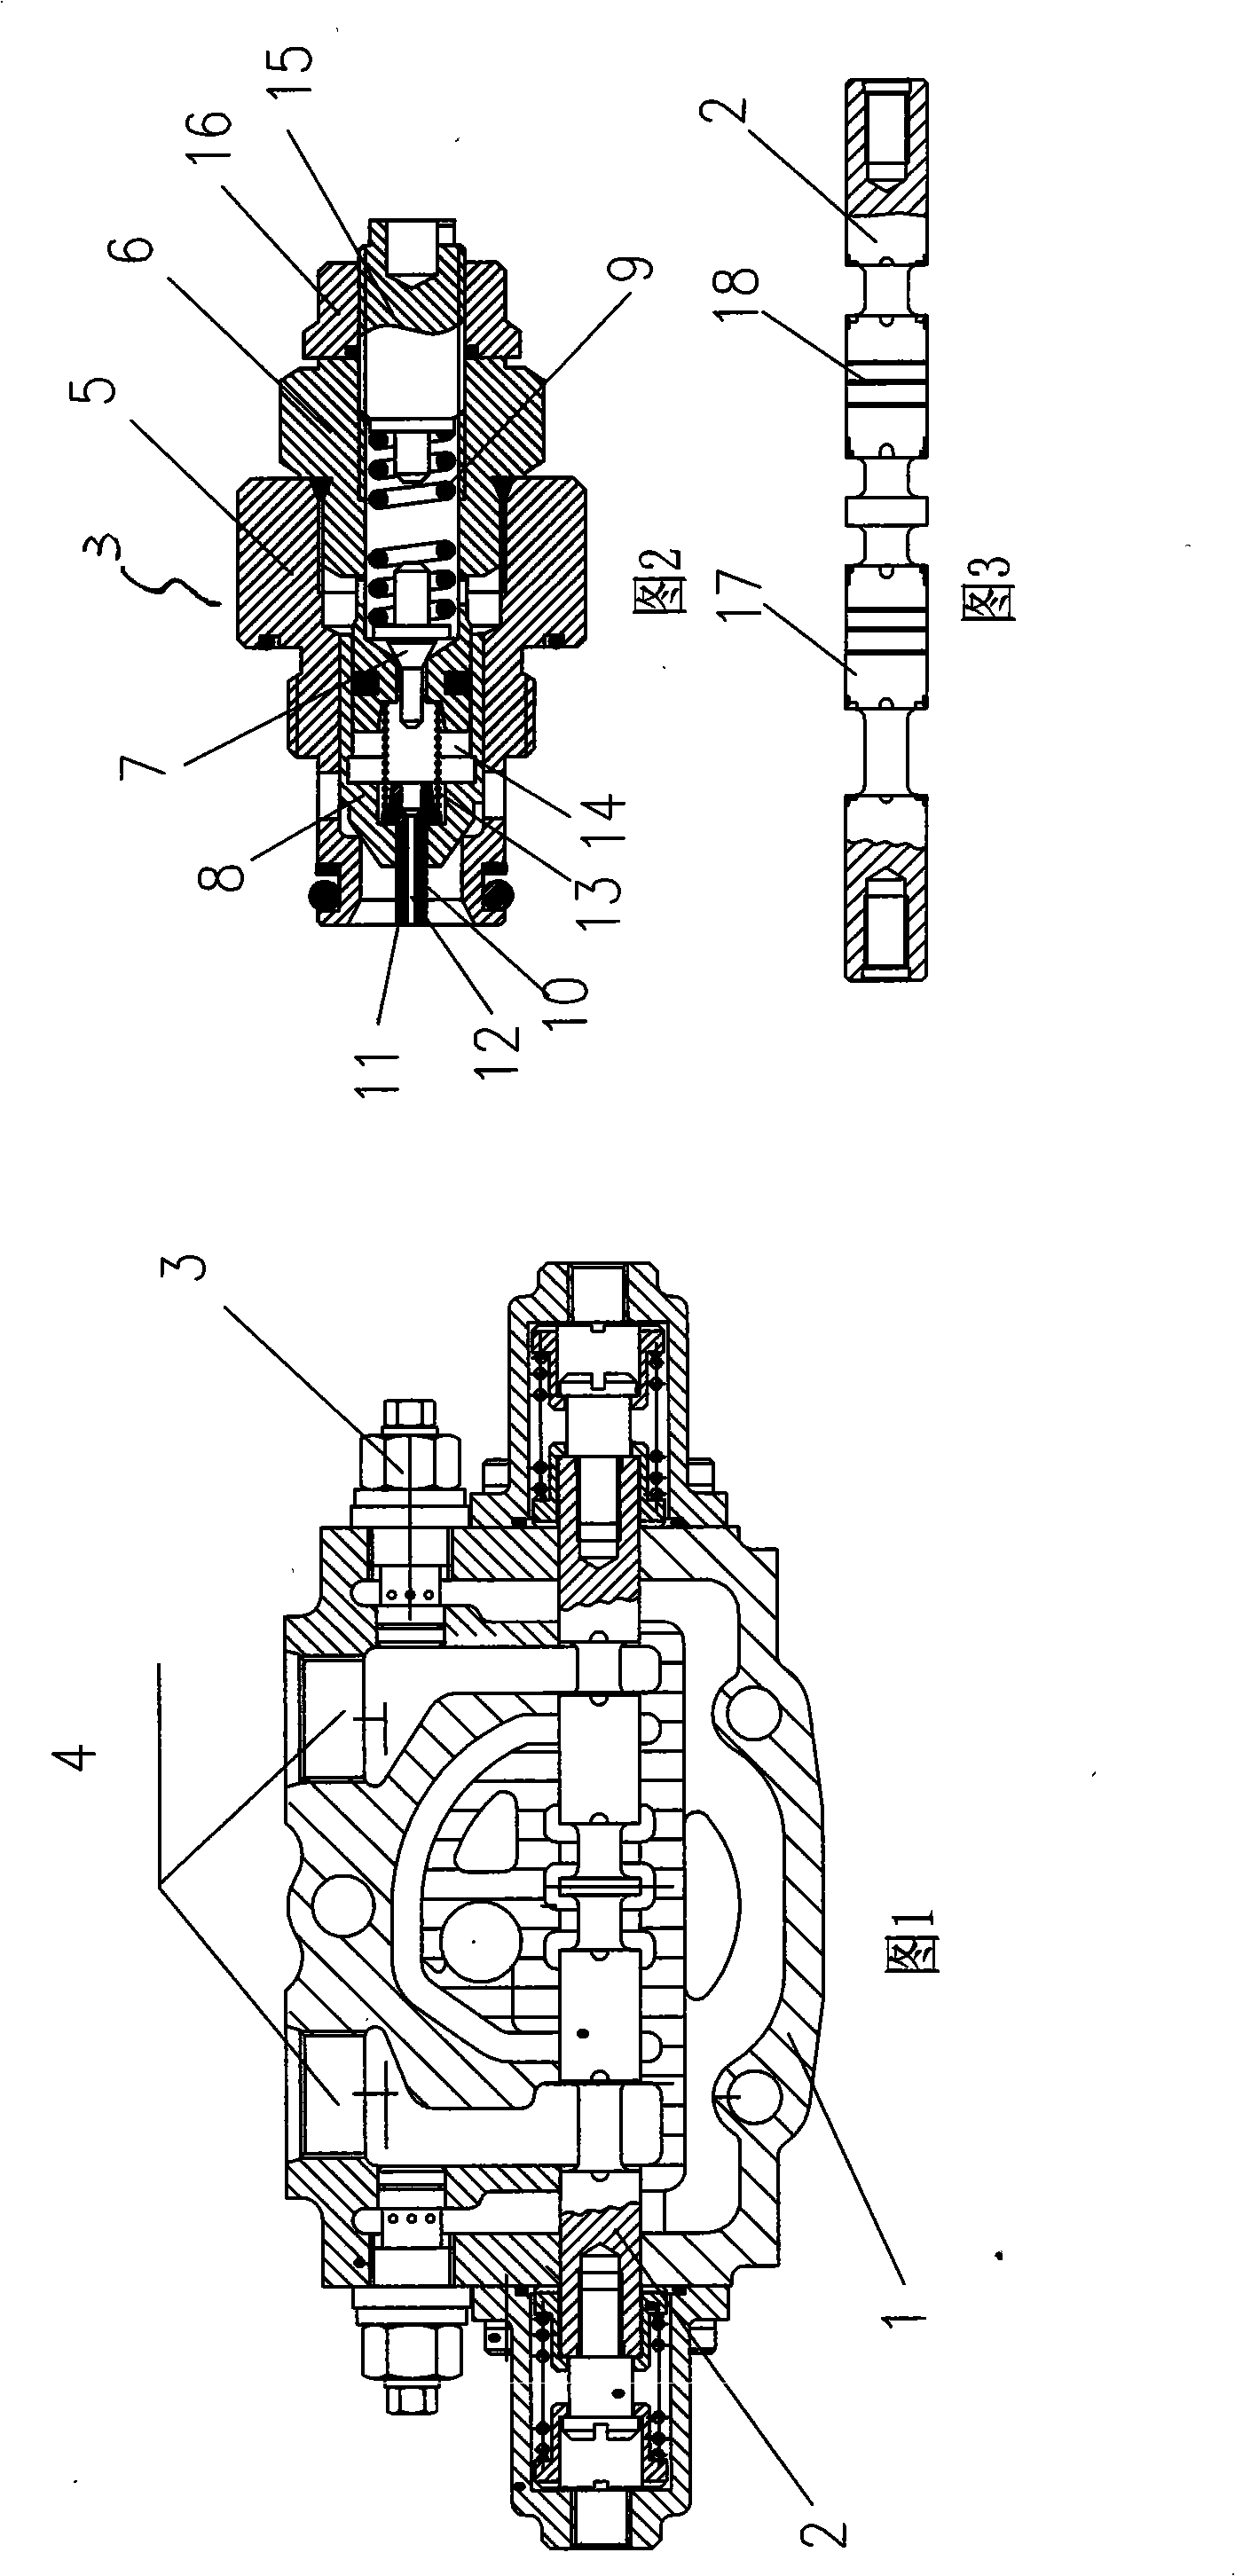 Hydraulic multichannel conversion valve